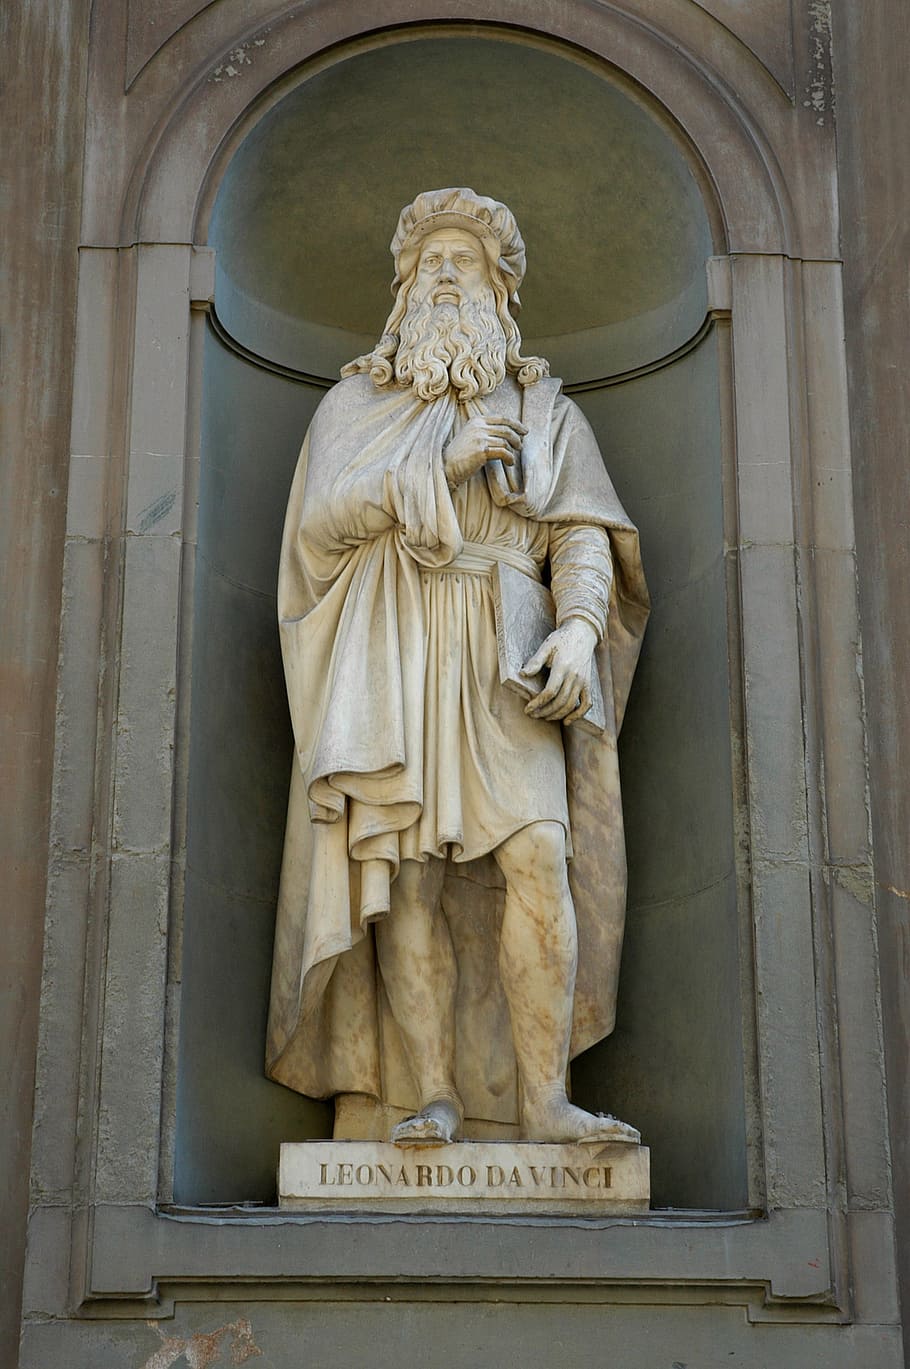 Leonardo Da Vinci, Penemu, intelijen, seni dan kerajinan, patung, tidak ada orang, vertikal, laki-laki, arsitektur, gereja